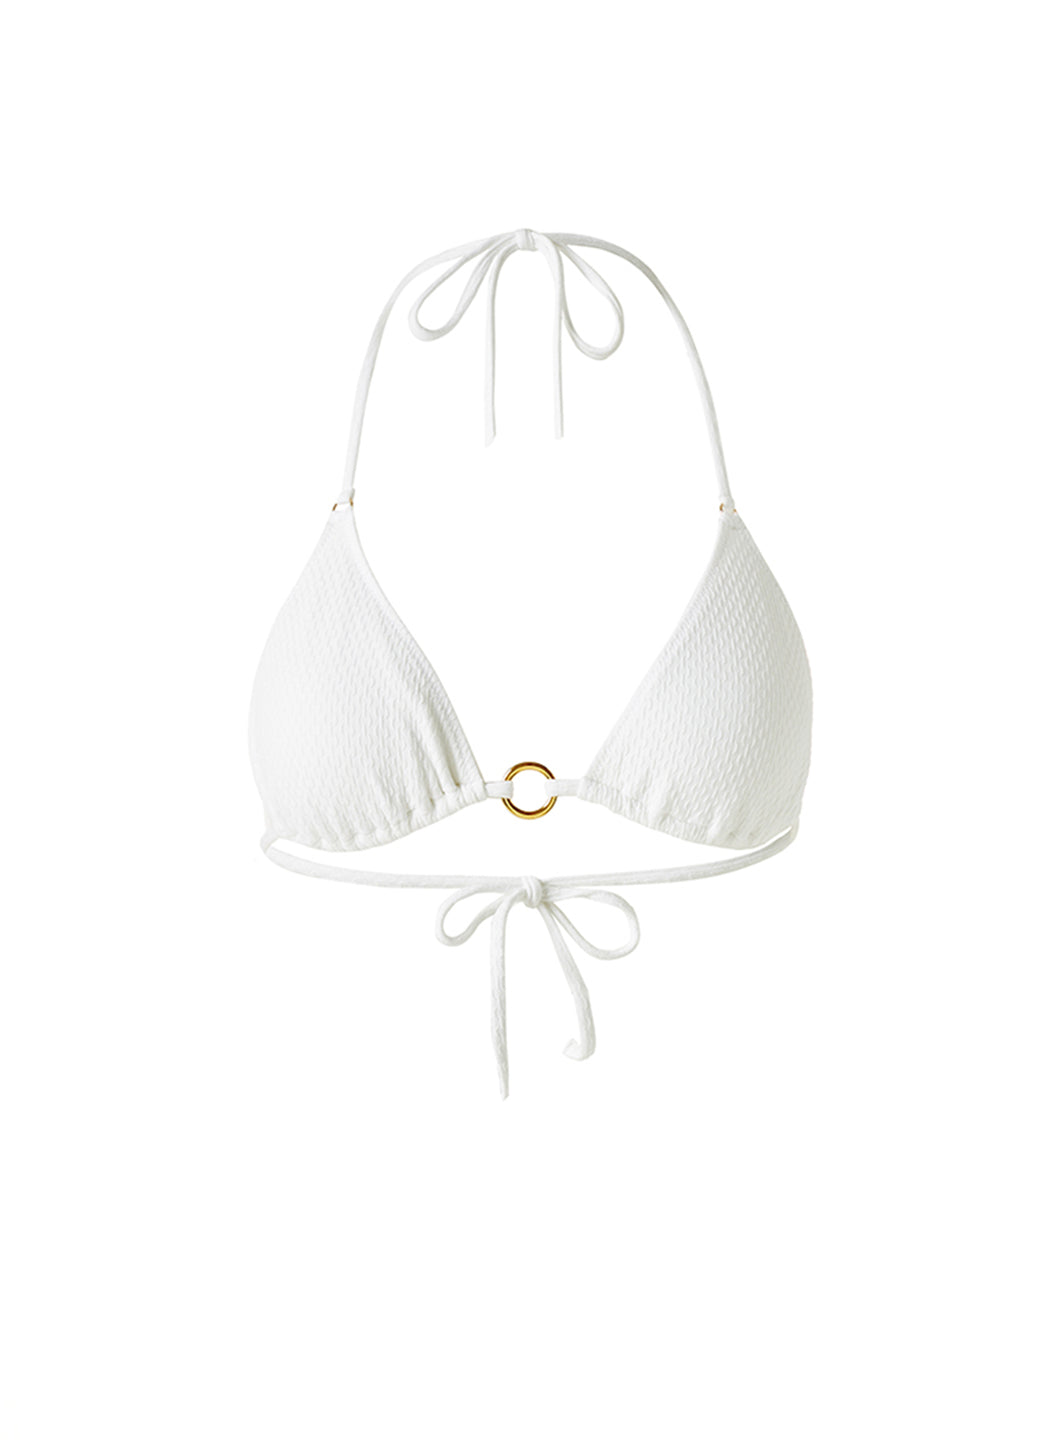 Melissa Odabash Venice White Textured Triangle Bikini Top | Official Website